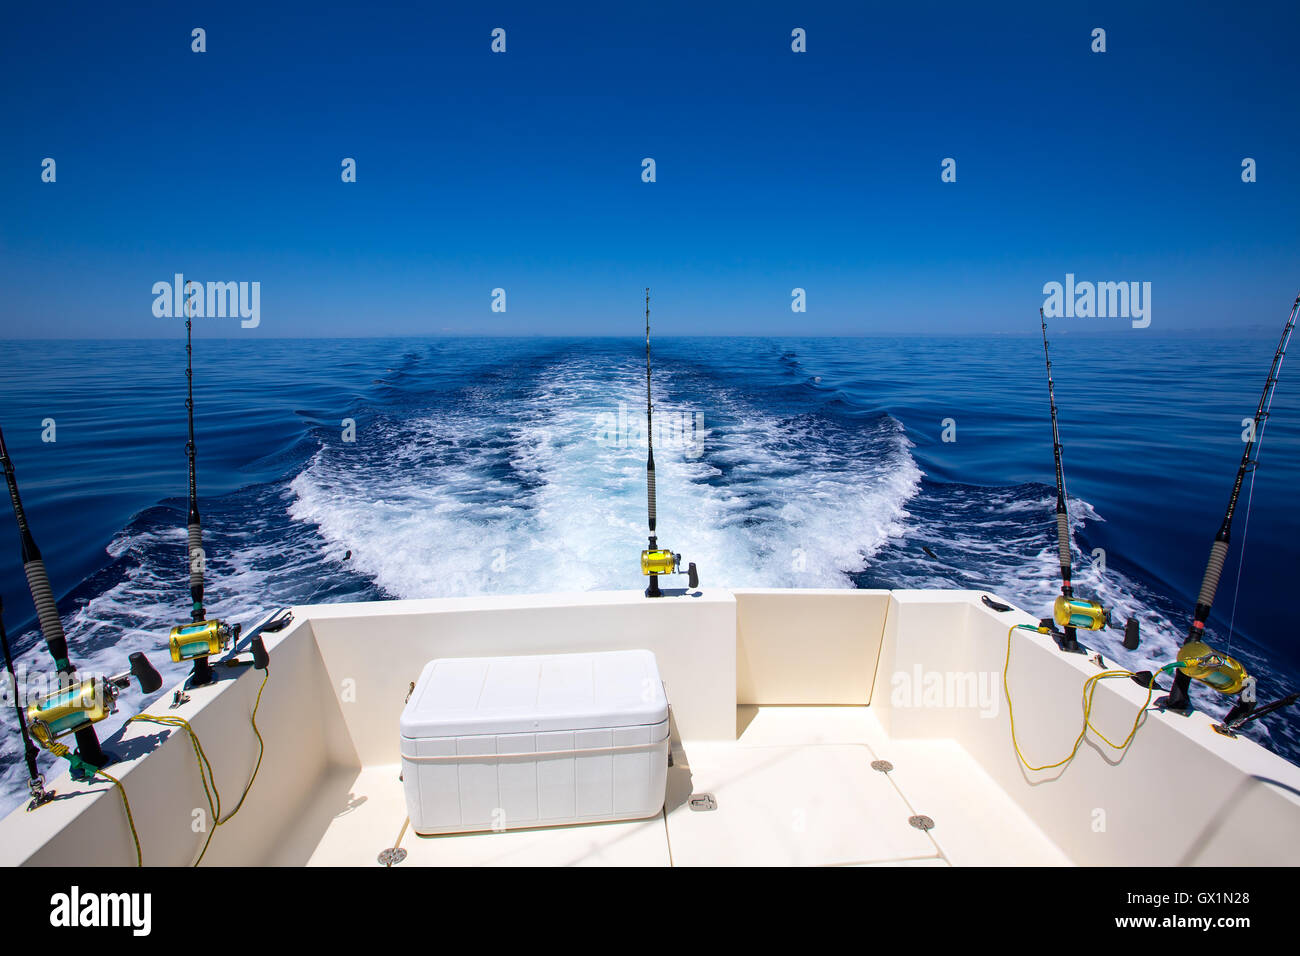 https://c8.alamy.com/comp/GX1N28/fishing-boat-stern-deck-with-trolling-fishing-rods-and-reels-GX1N28.jpg